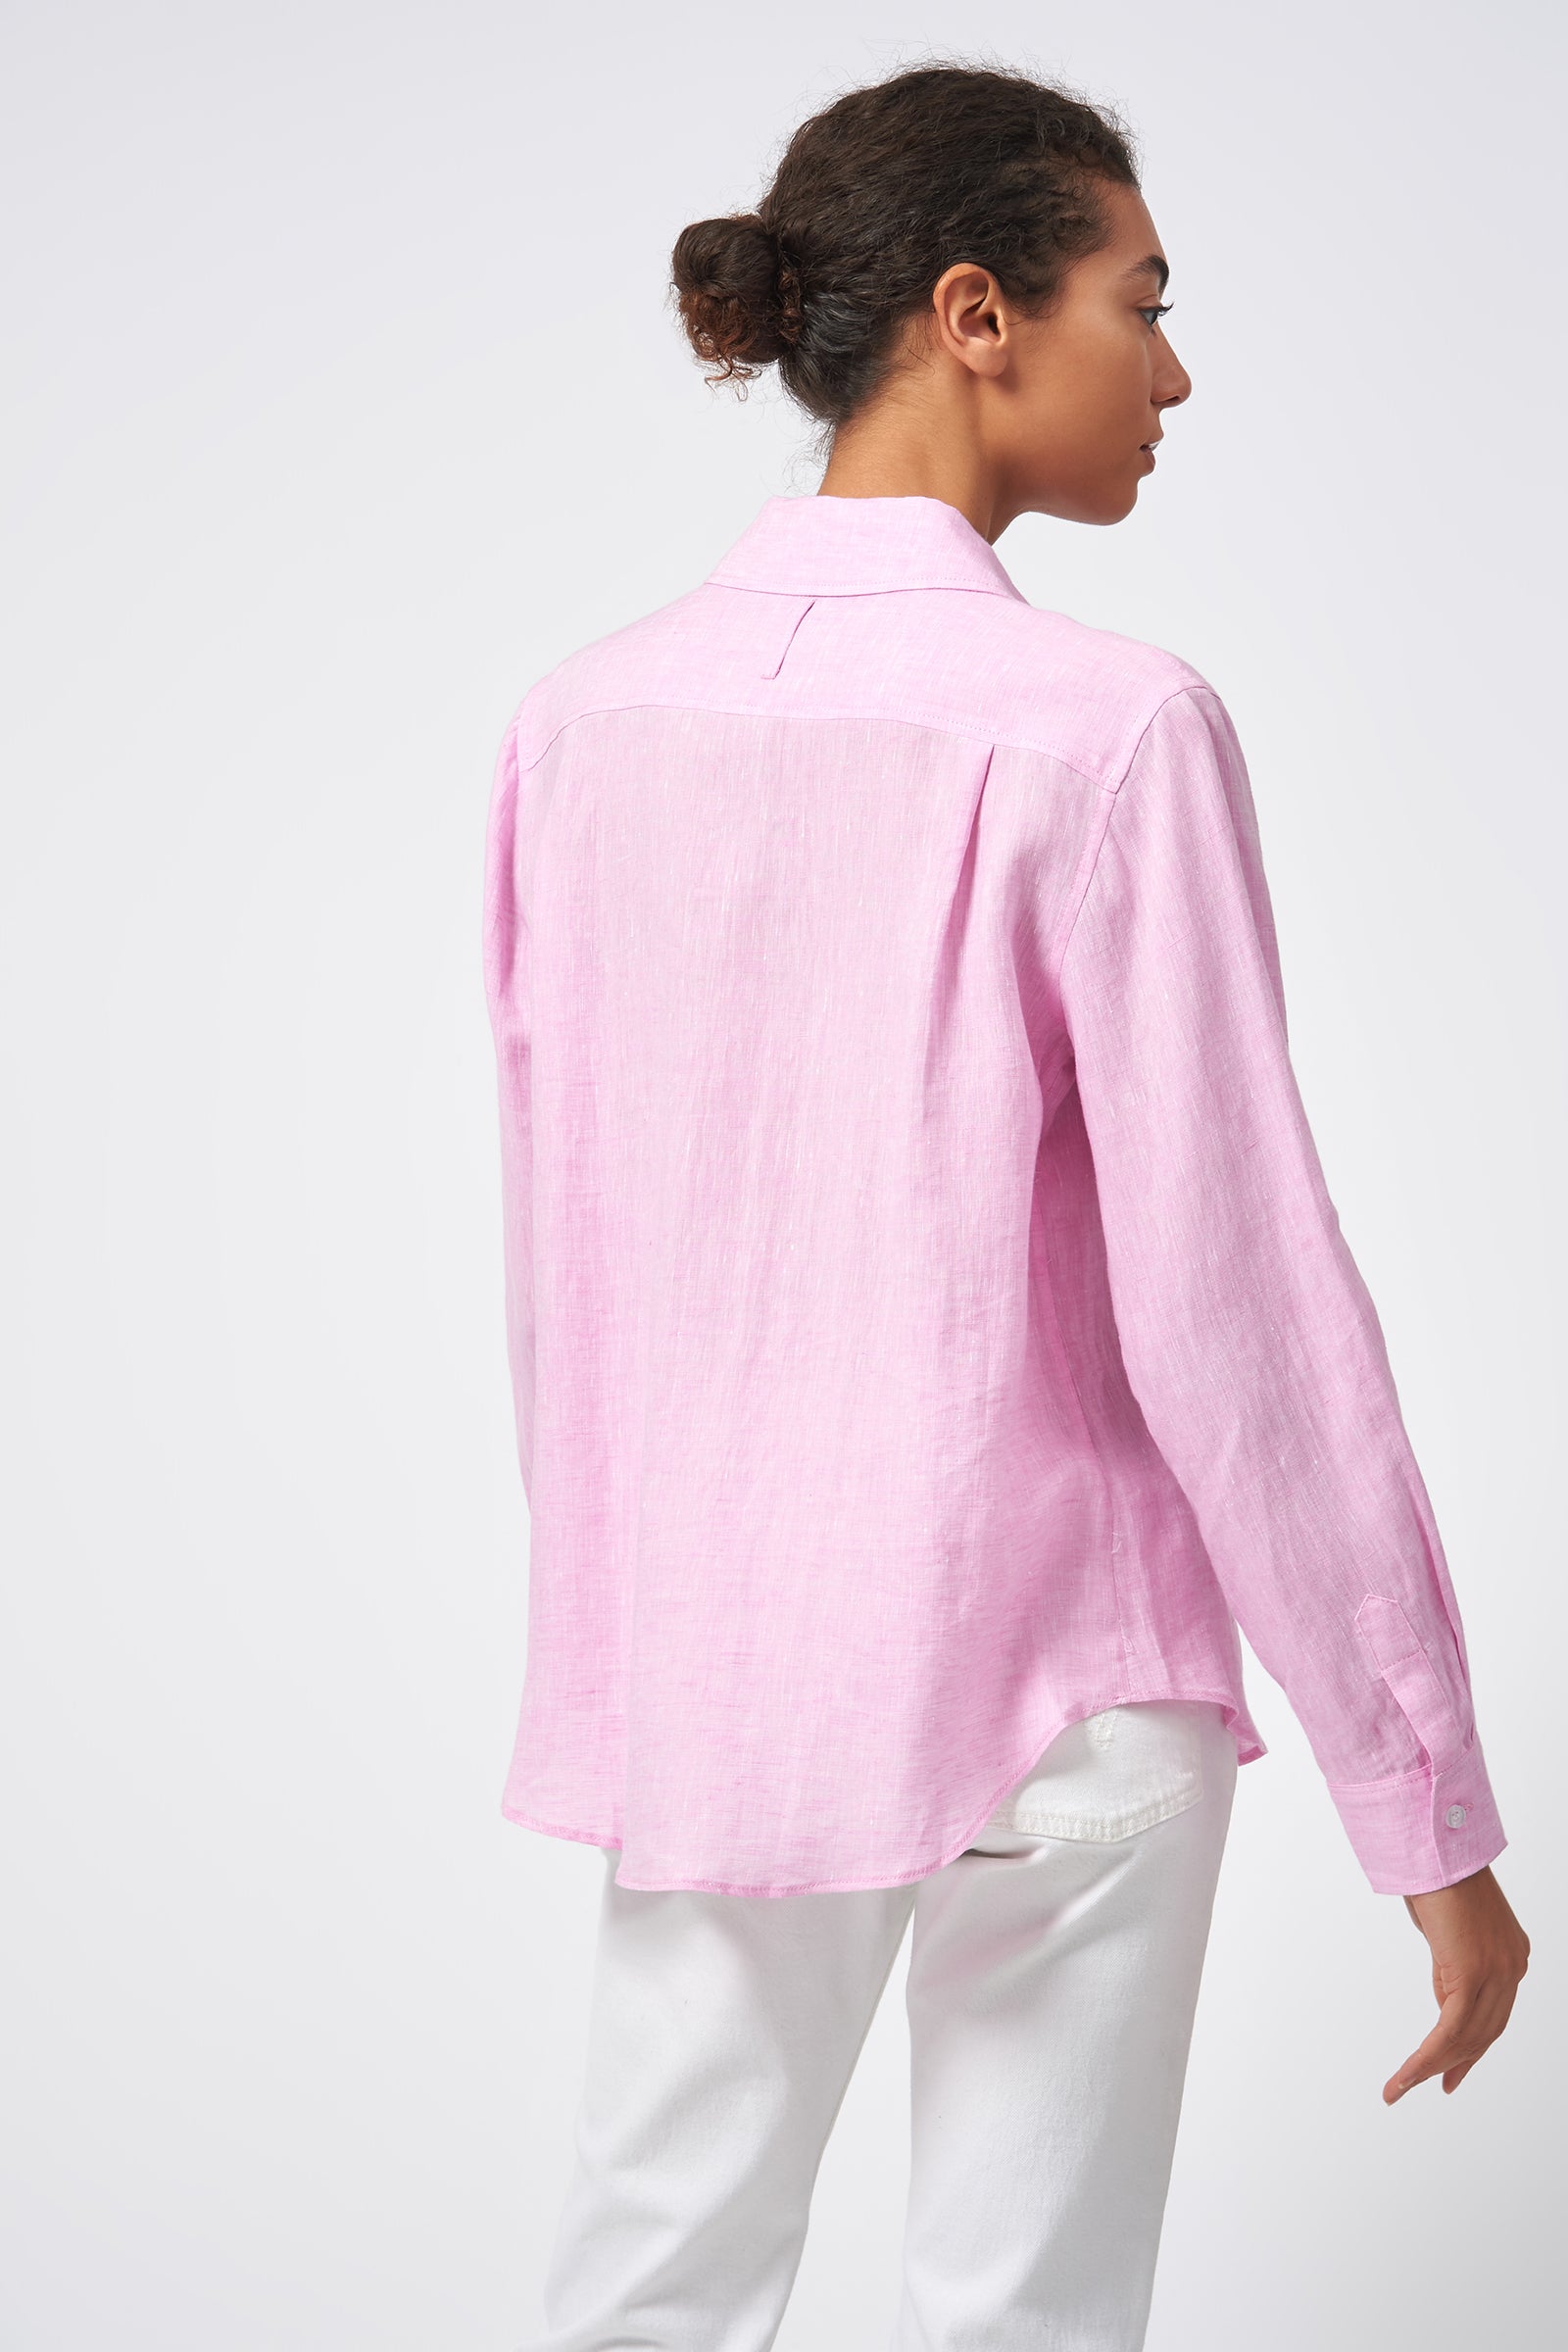 Kal Rieman Classic Tailored Shirt European Linen Pink On Model Back View